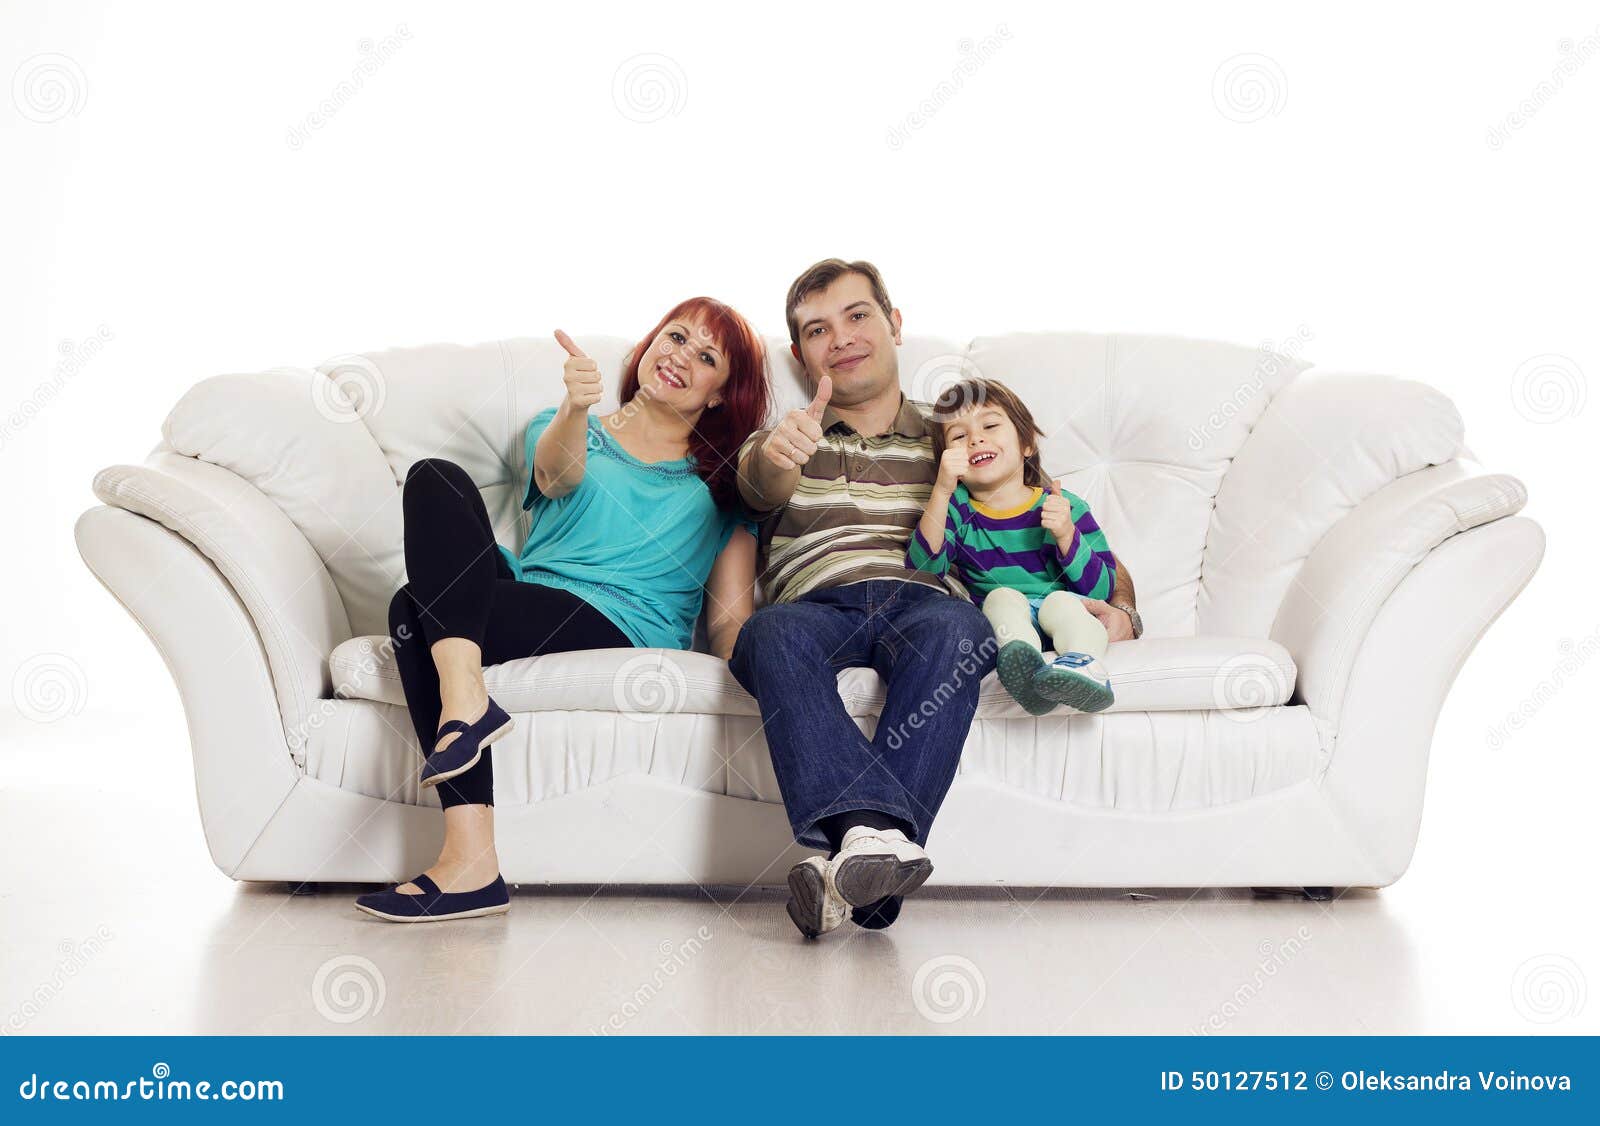 Мамаши на диване. Мама папа и сын на диване. Мама и папа сидят на диване. Мать сидит с сыном на диване.